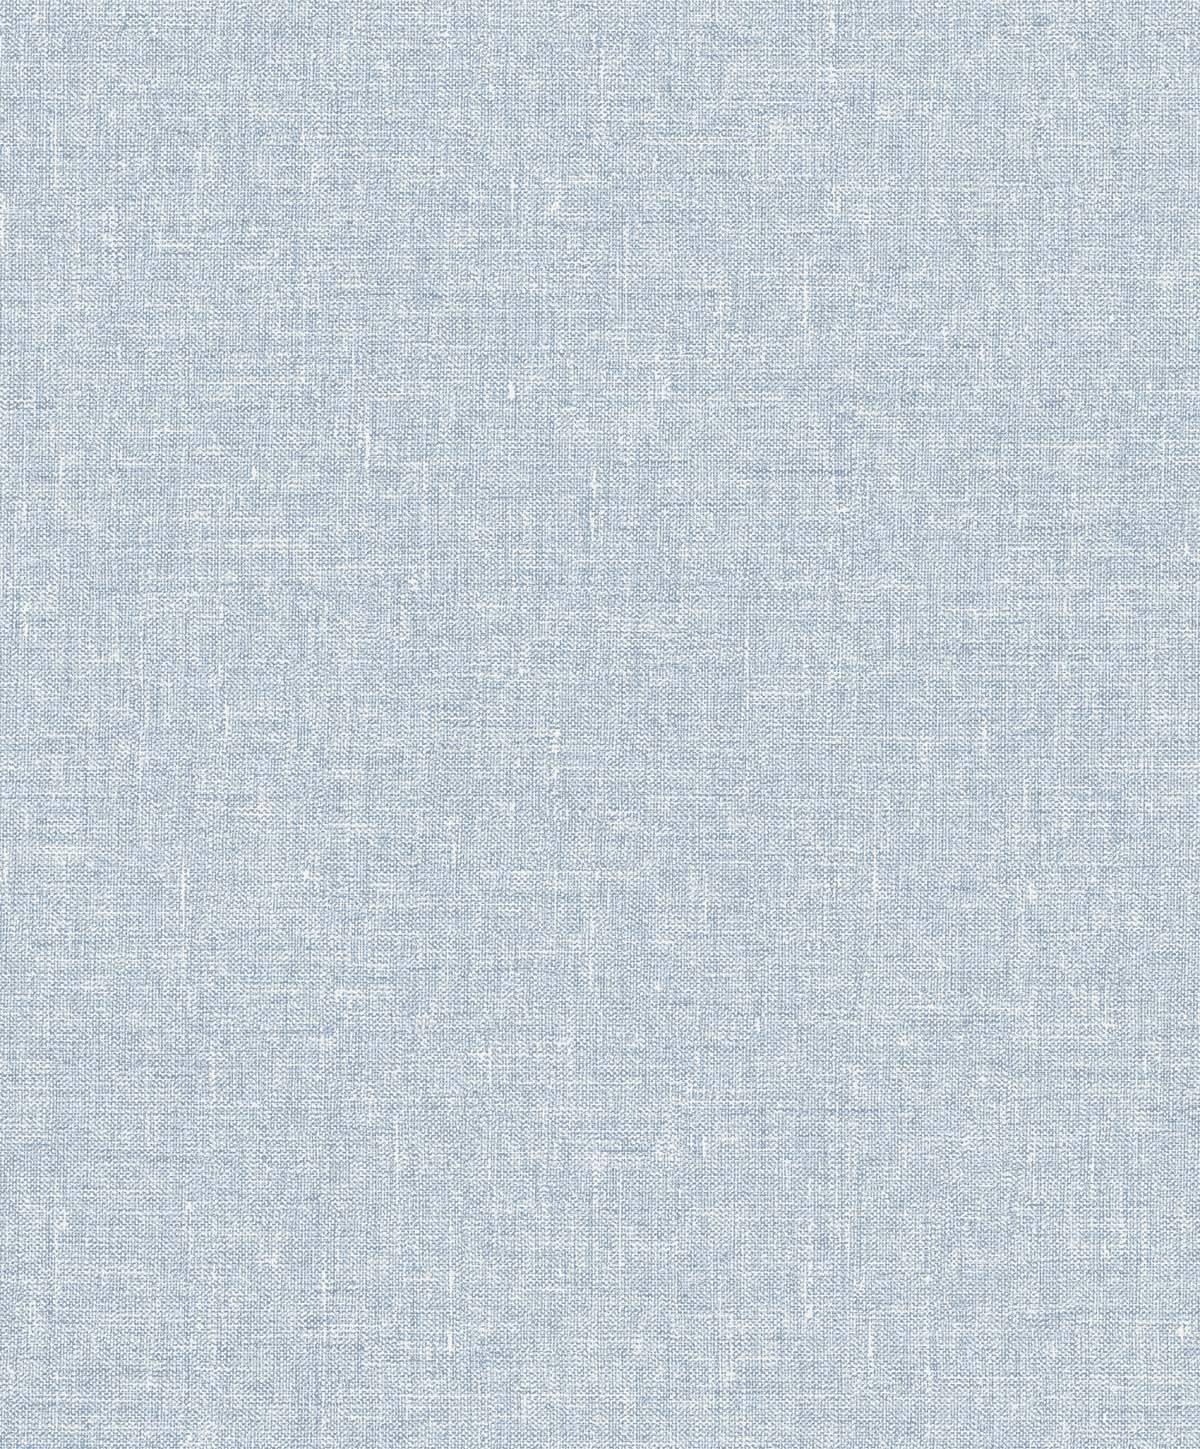 Seabrook Designs The Simple Life Soft Linen Wallpaper - Midwinter